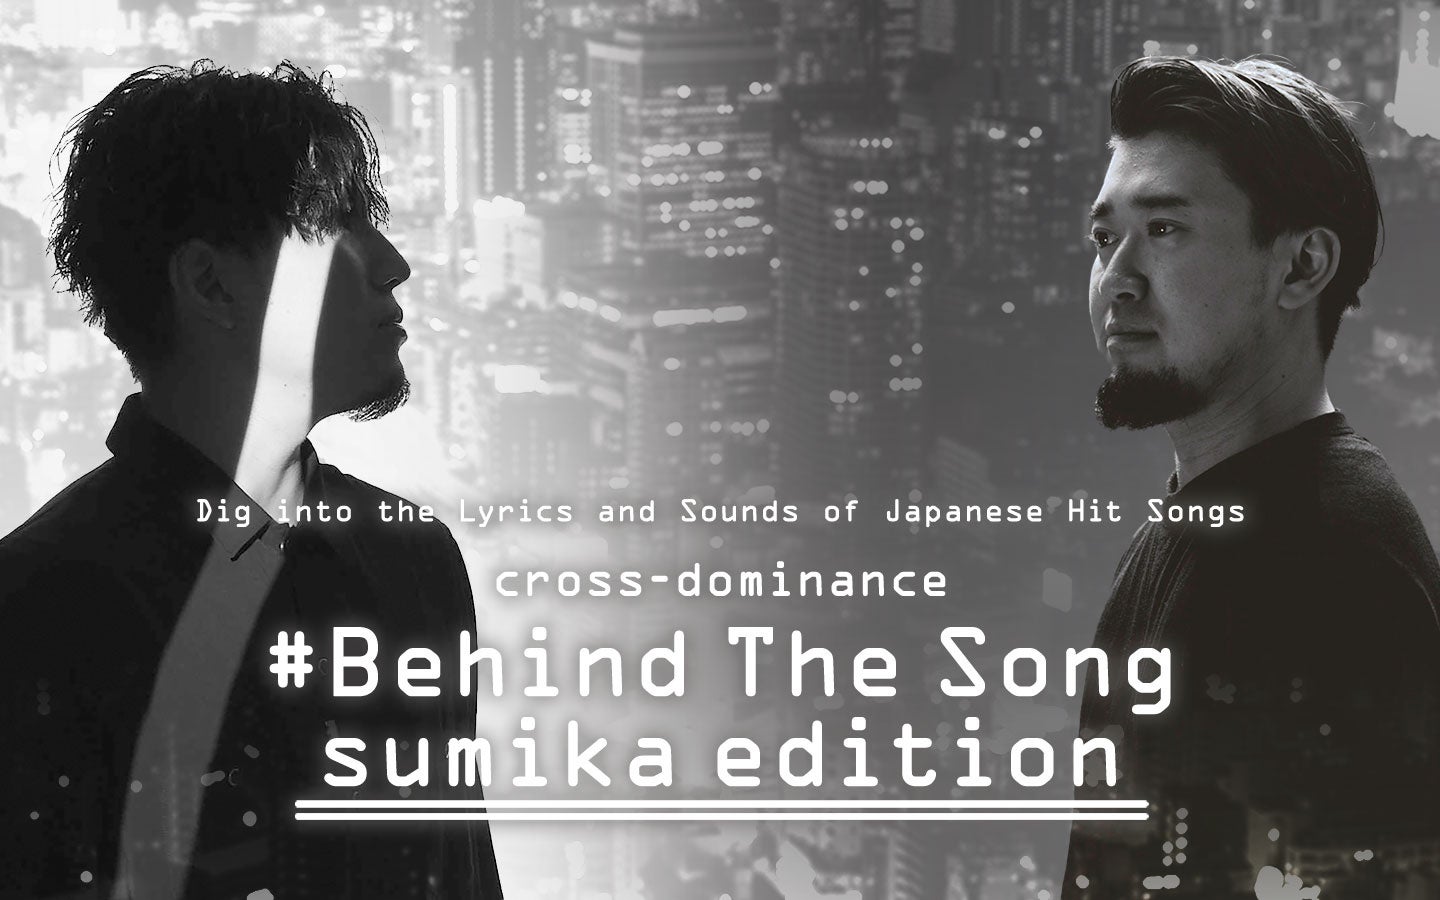 cross-dominance初の全国ネット冠番組『cross-dominance #Behind The Song sumika edition』JFN系列各局にて5月19日(日)より順次放送！